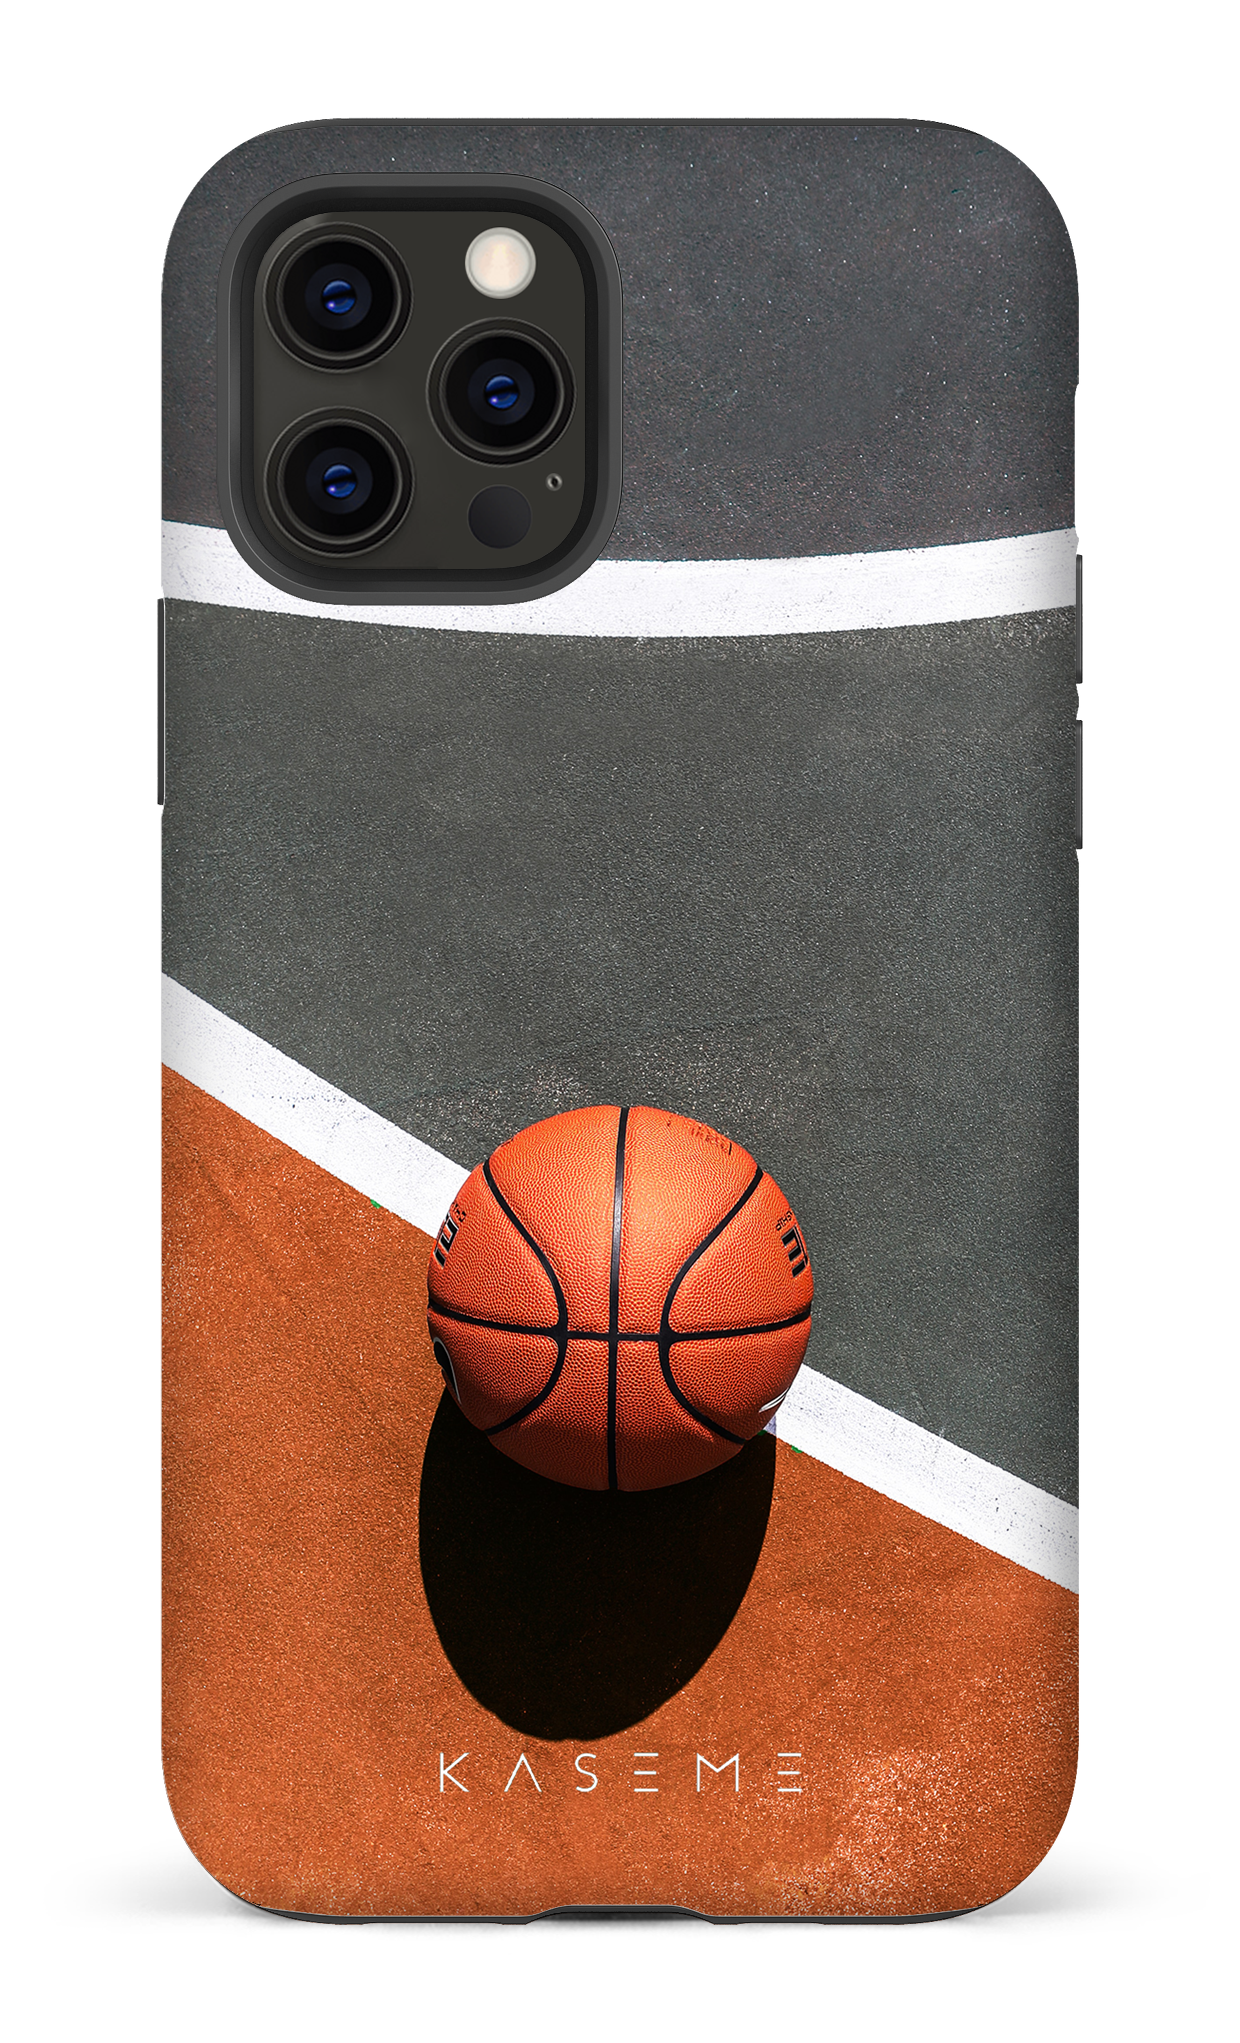 Baller - iPhone 12 Pro